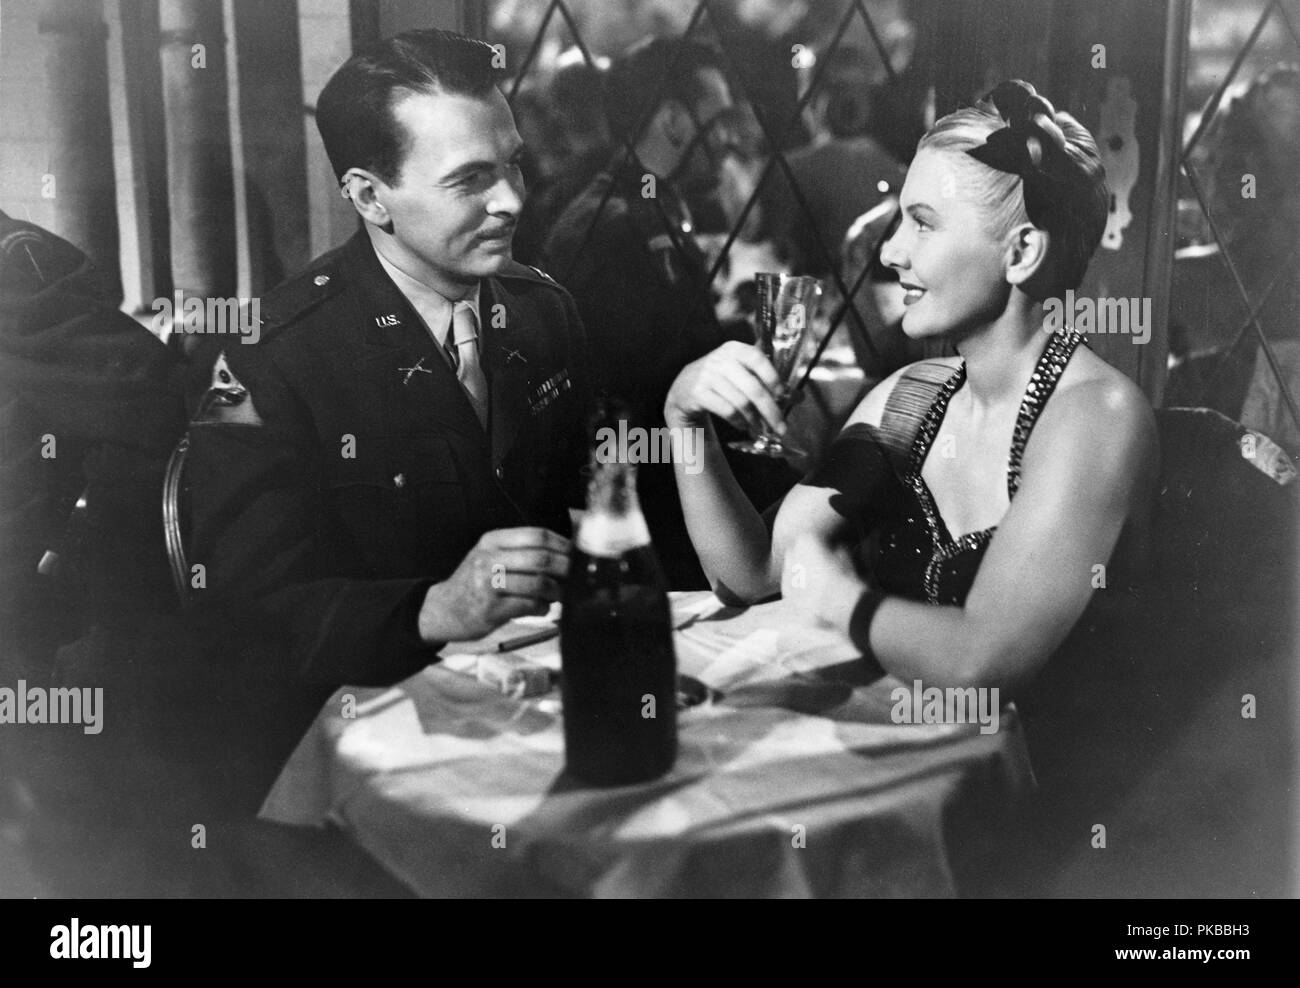 Afa Année : 1948 USA Réalisateur : Billy Wilder Jean Arthur , John Lund Banque D'Images